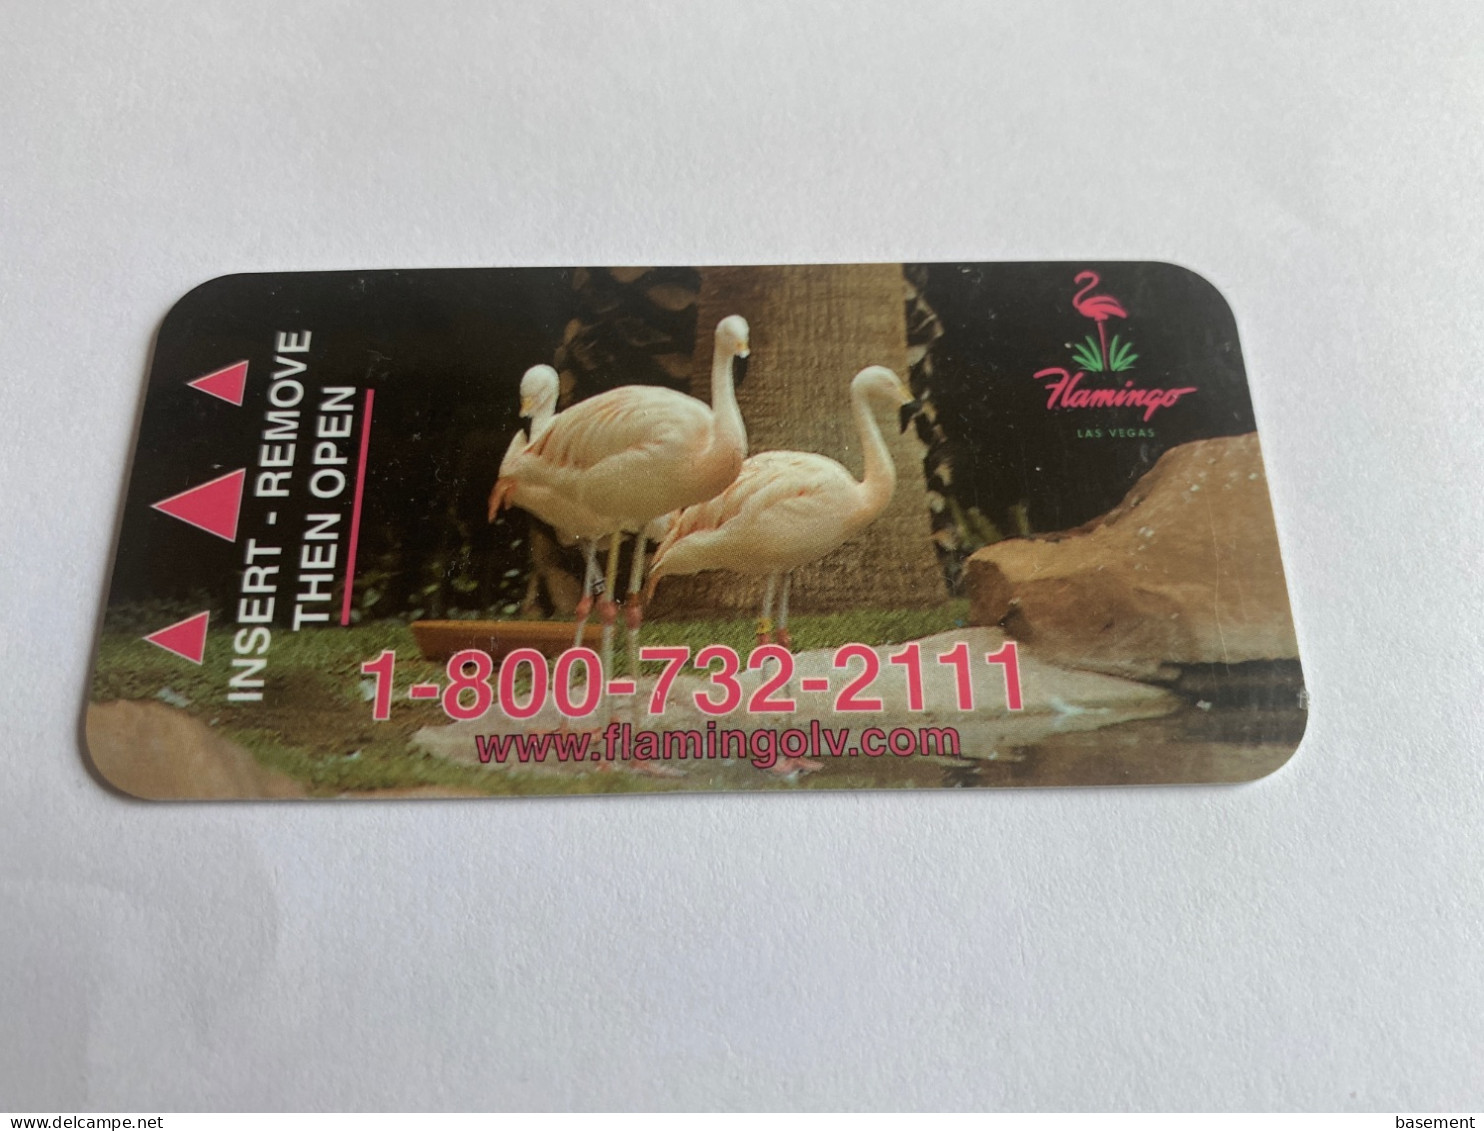 - 1 - Flamingo LAS Vegas Hotel Key Card - Cartes D'hotel